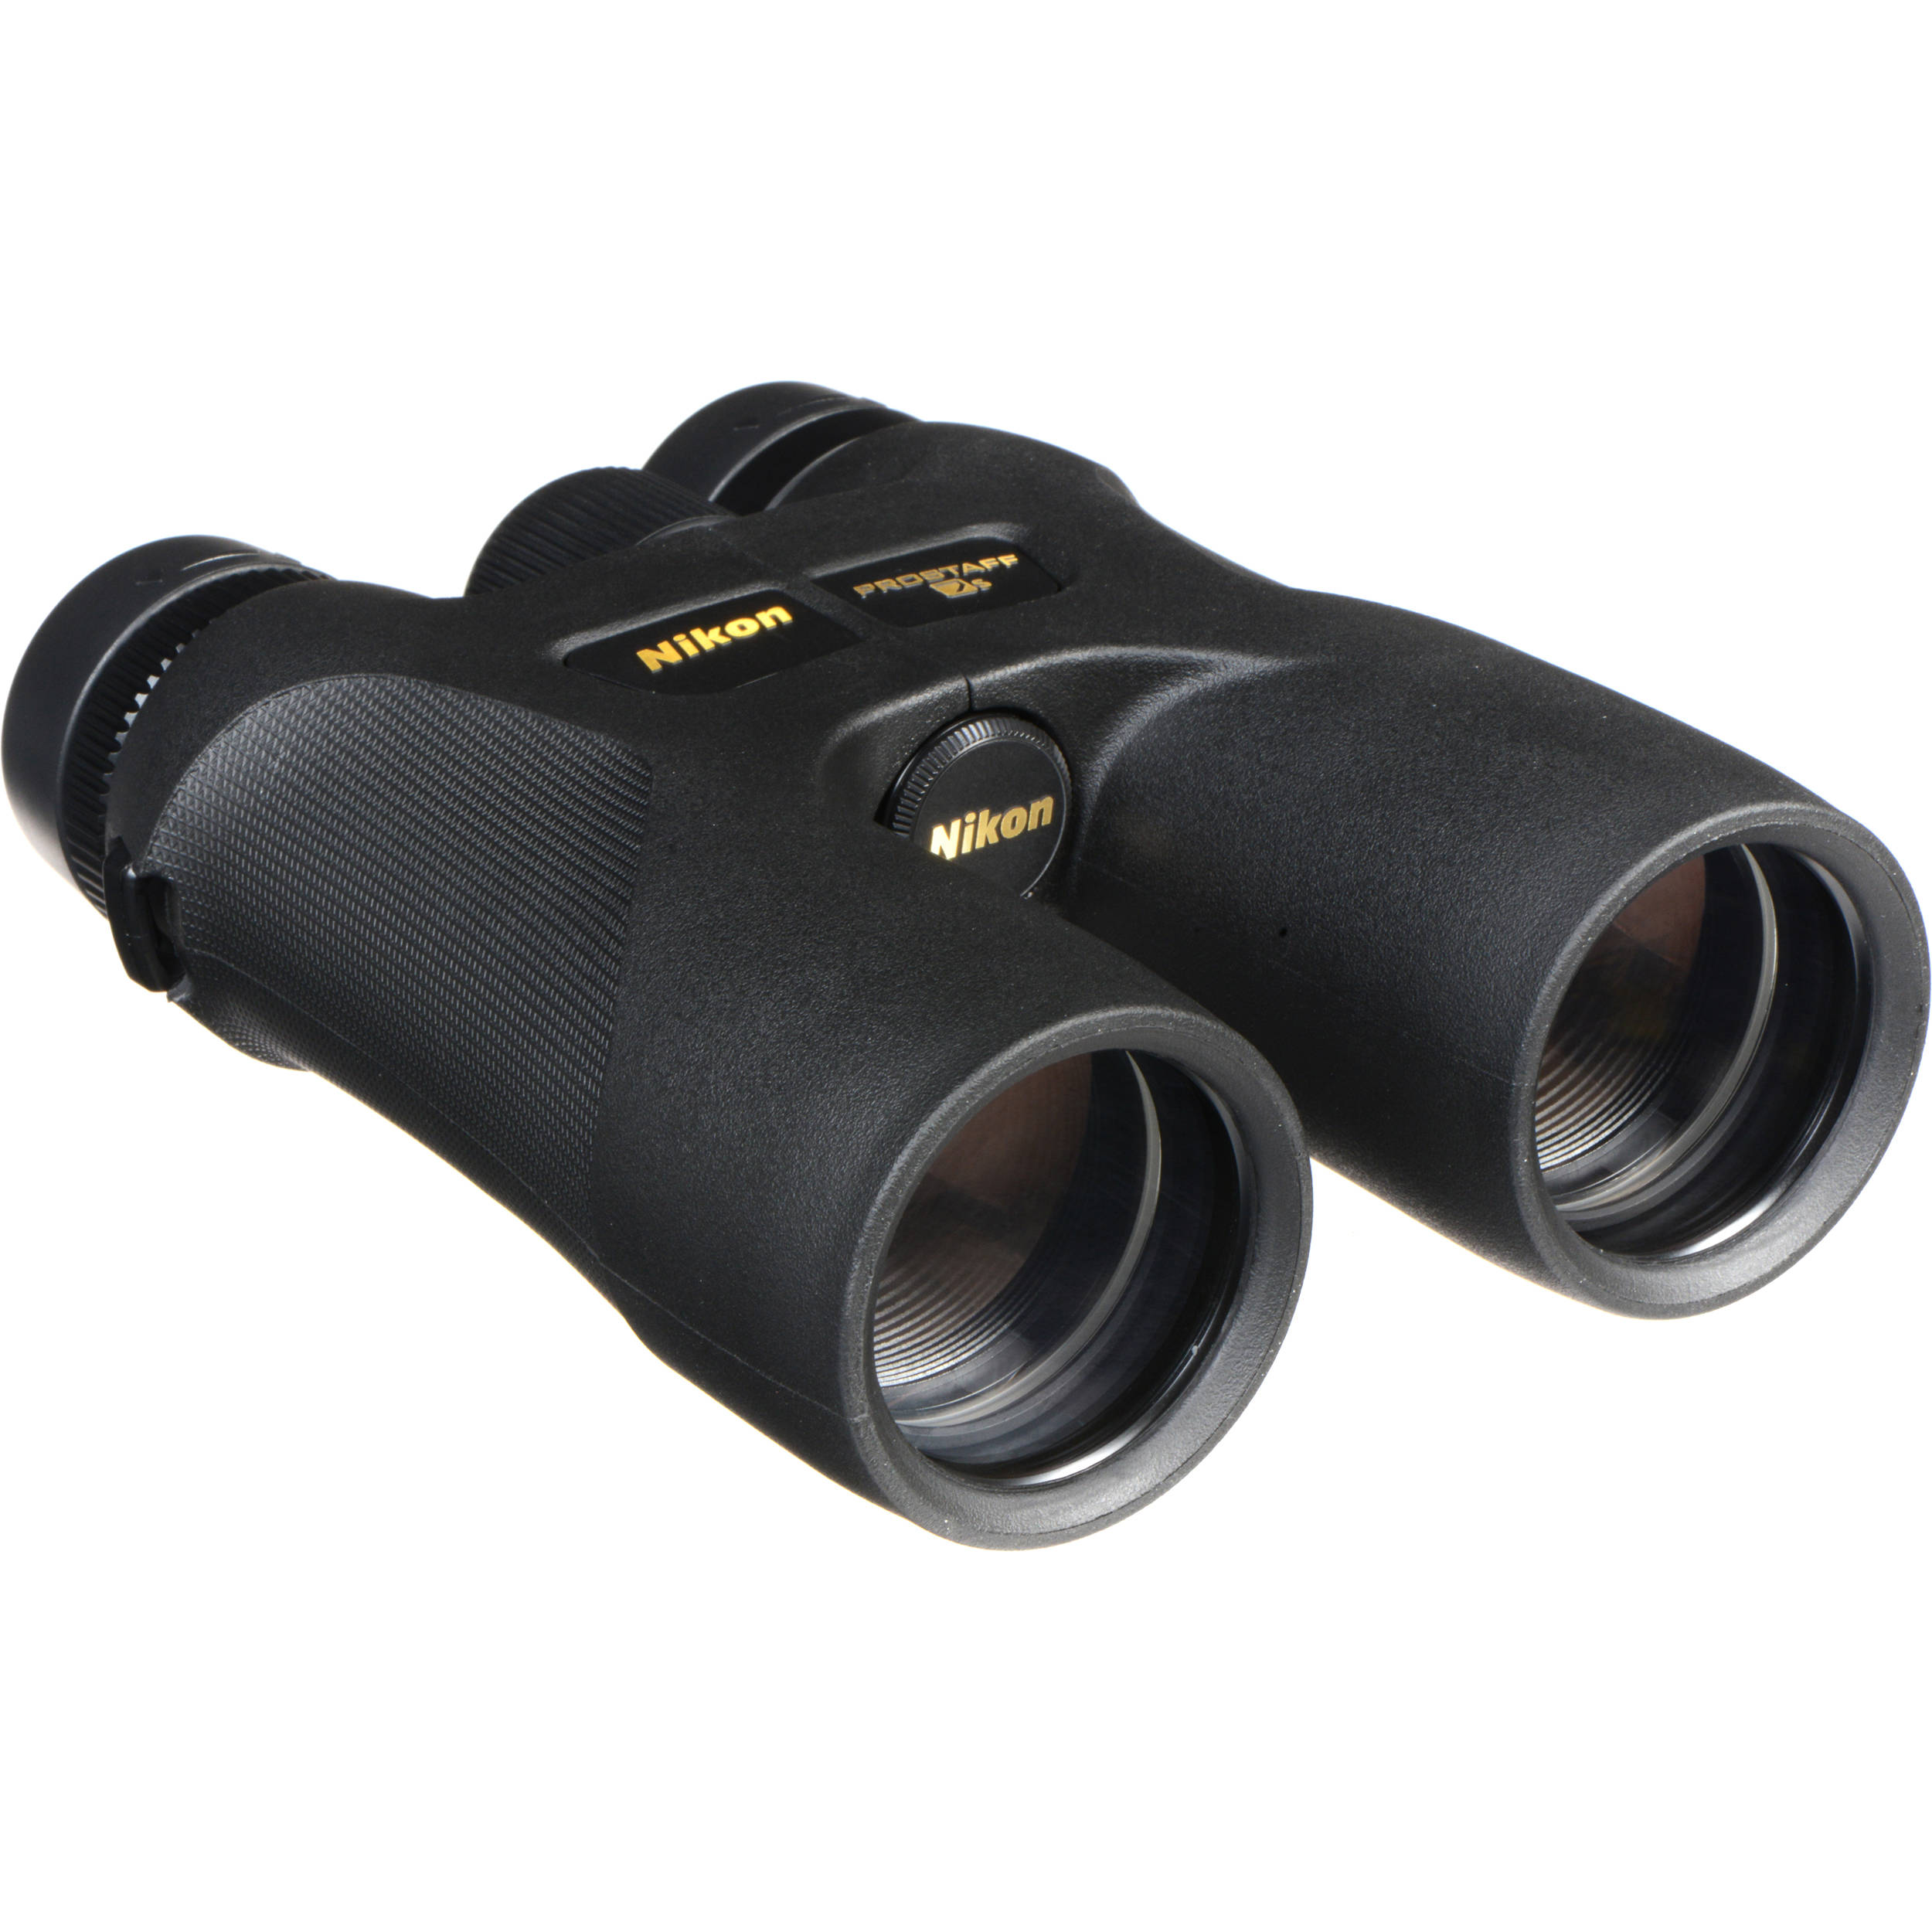 Nikon prostaff 7s binoculars review